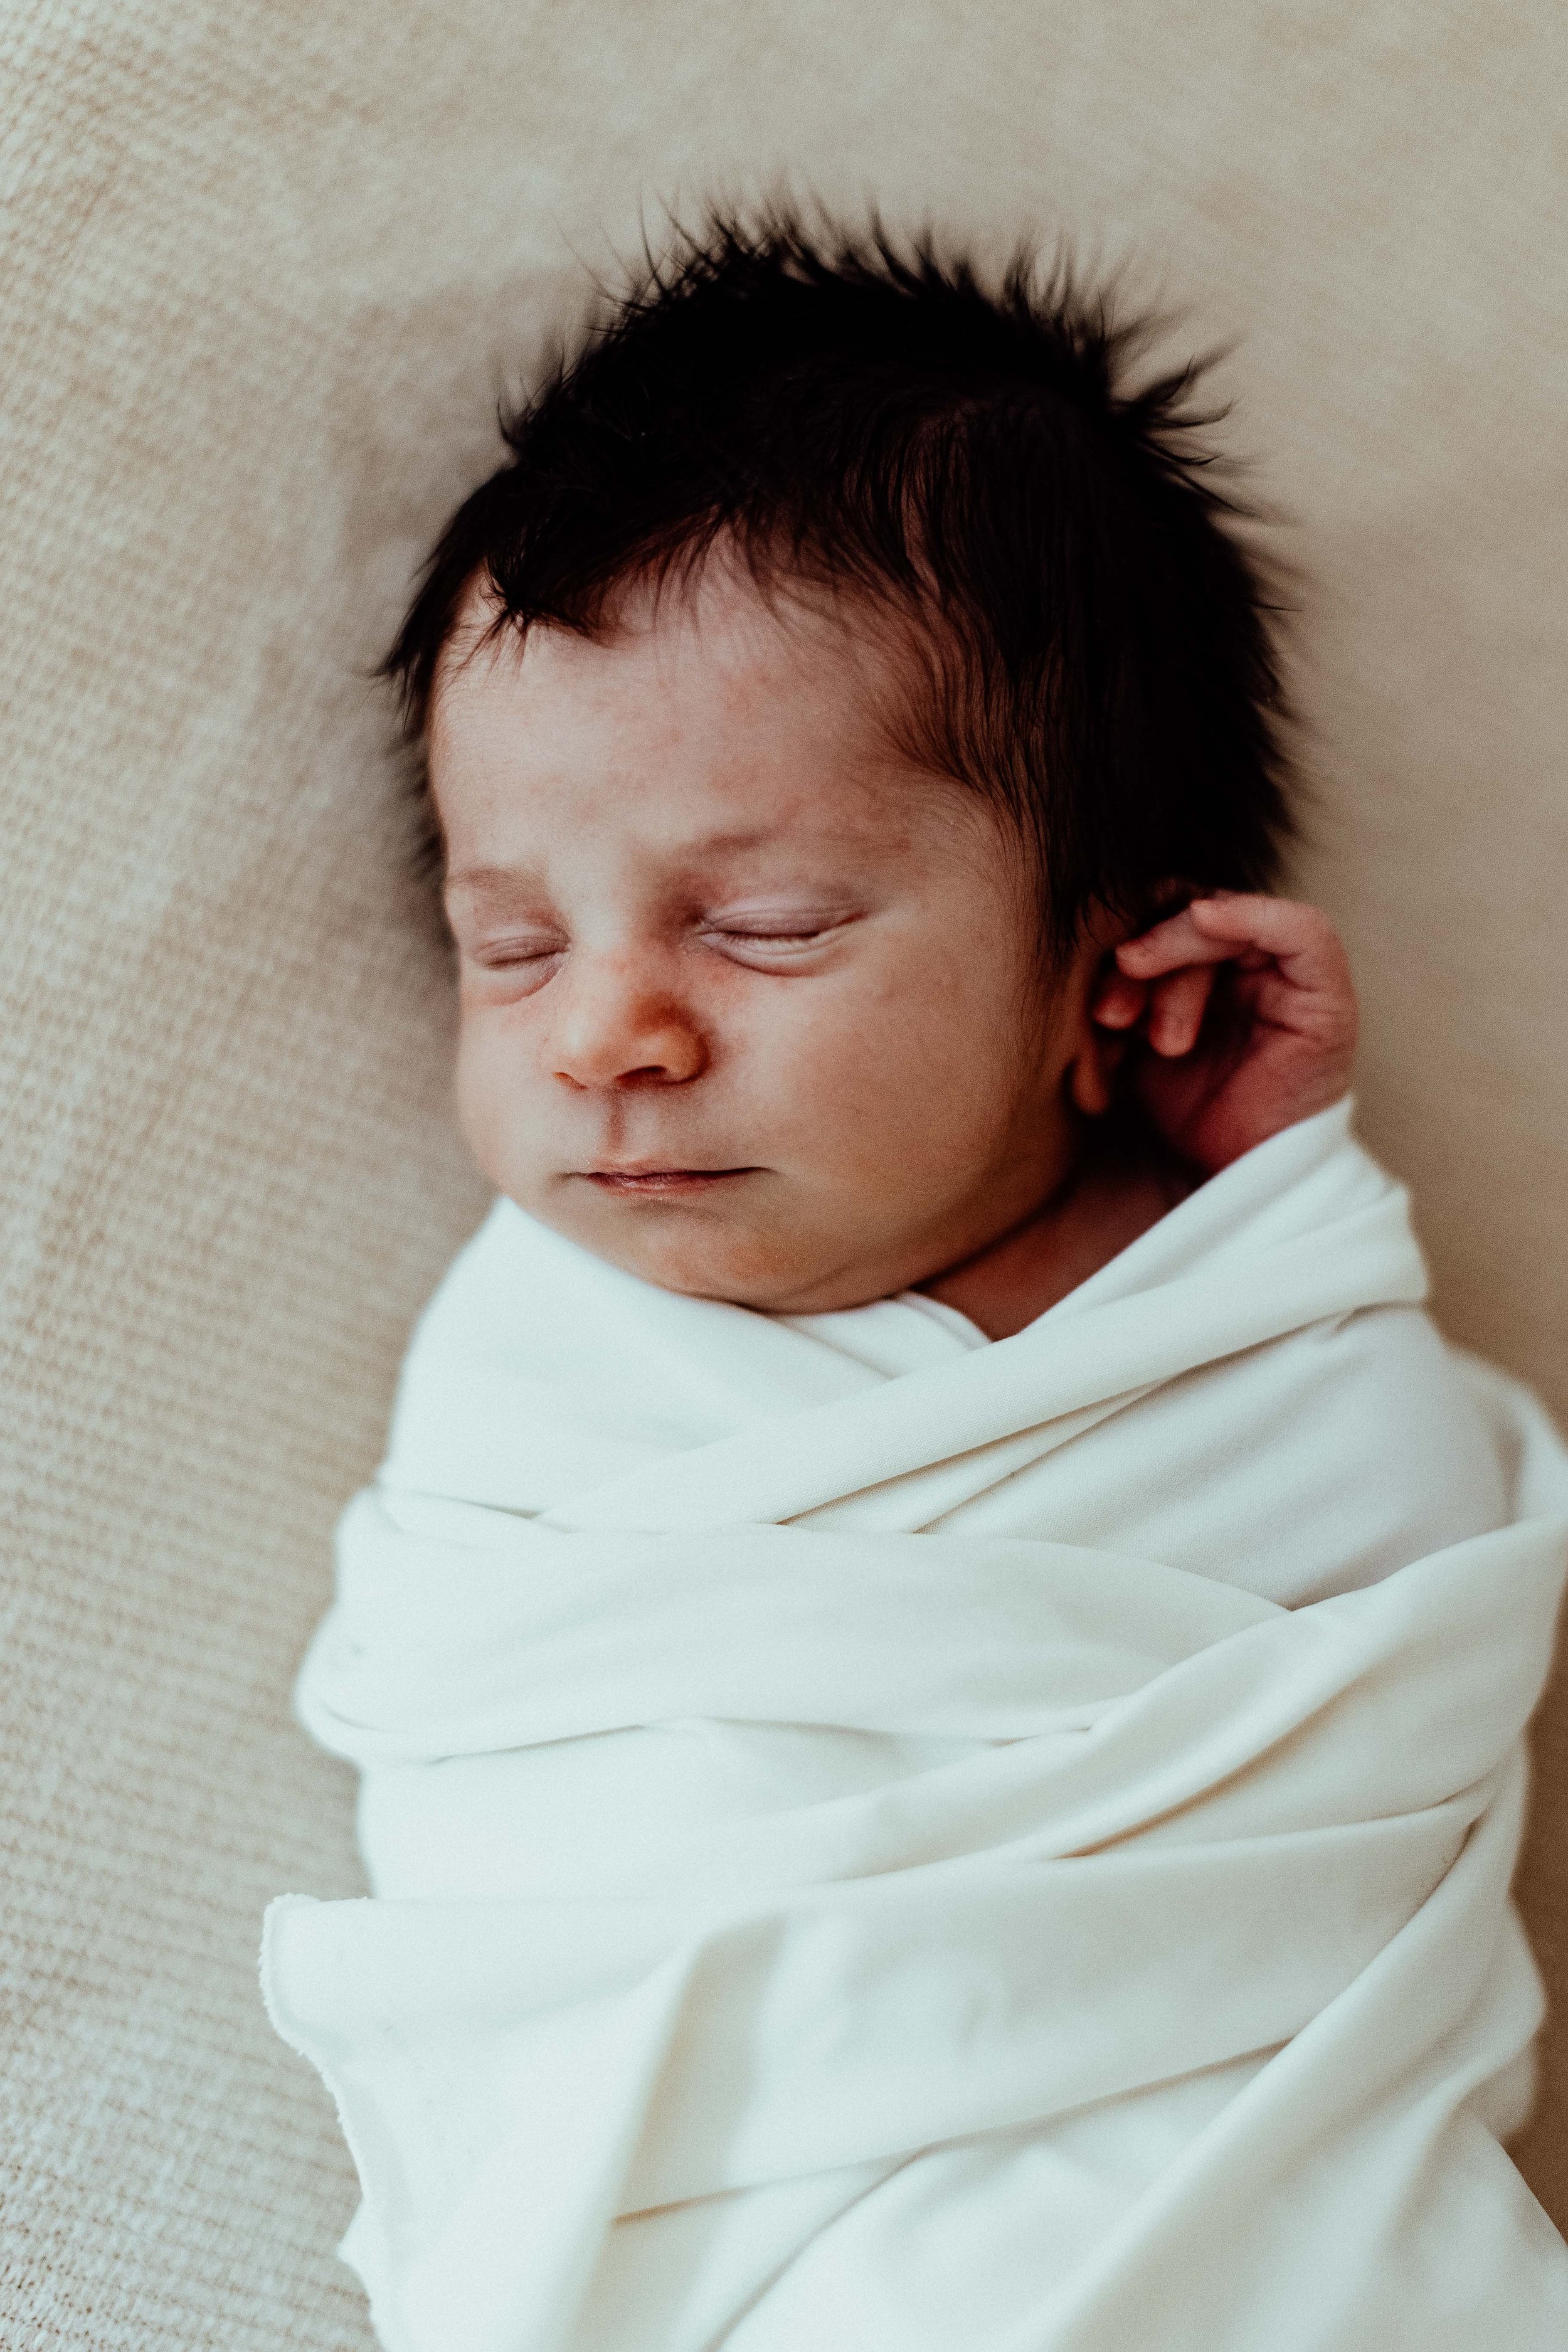 camden-newborn-photography-natural-light-lifestyle-leo-newborn-38.jpg